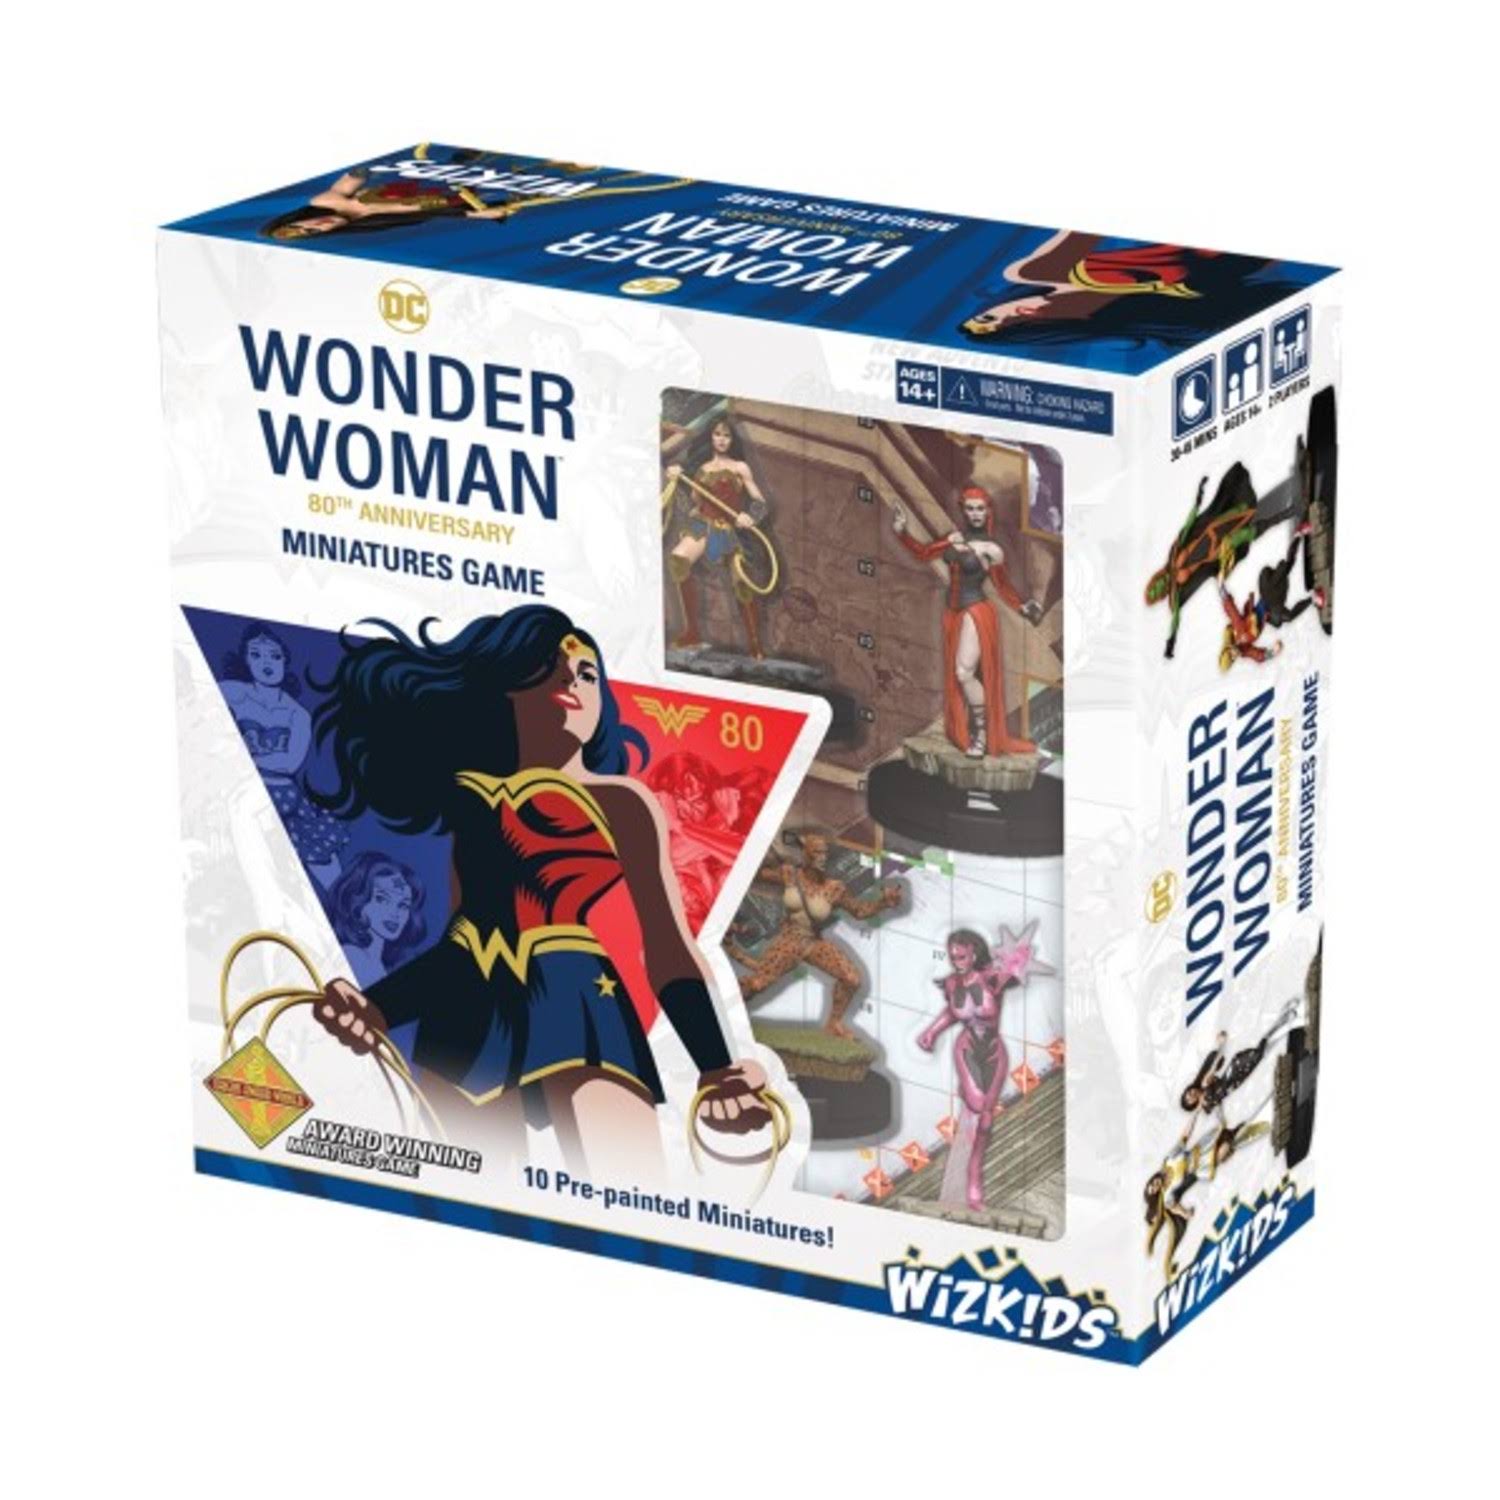 HeroClix: DC Wonder Woman 80th Anniversary Miniatures Game